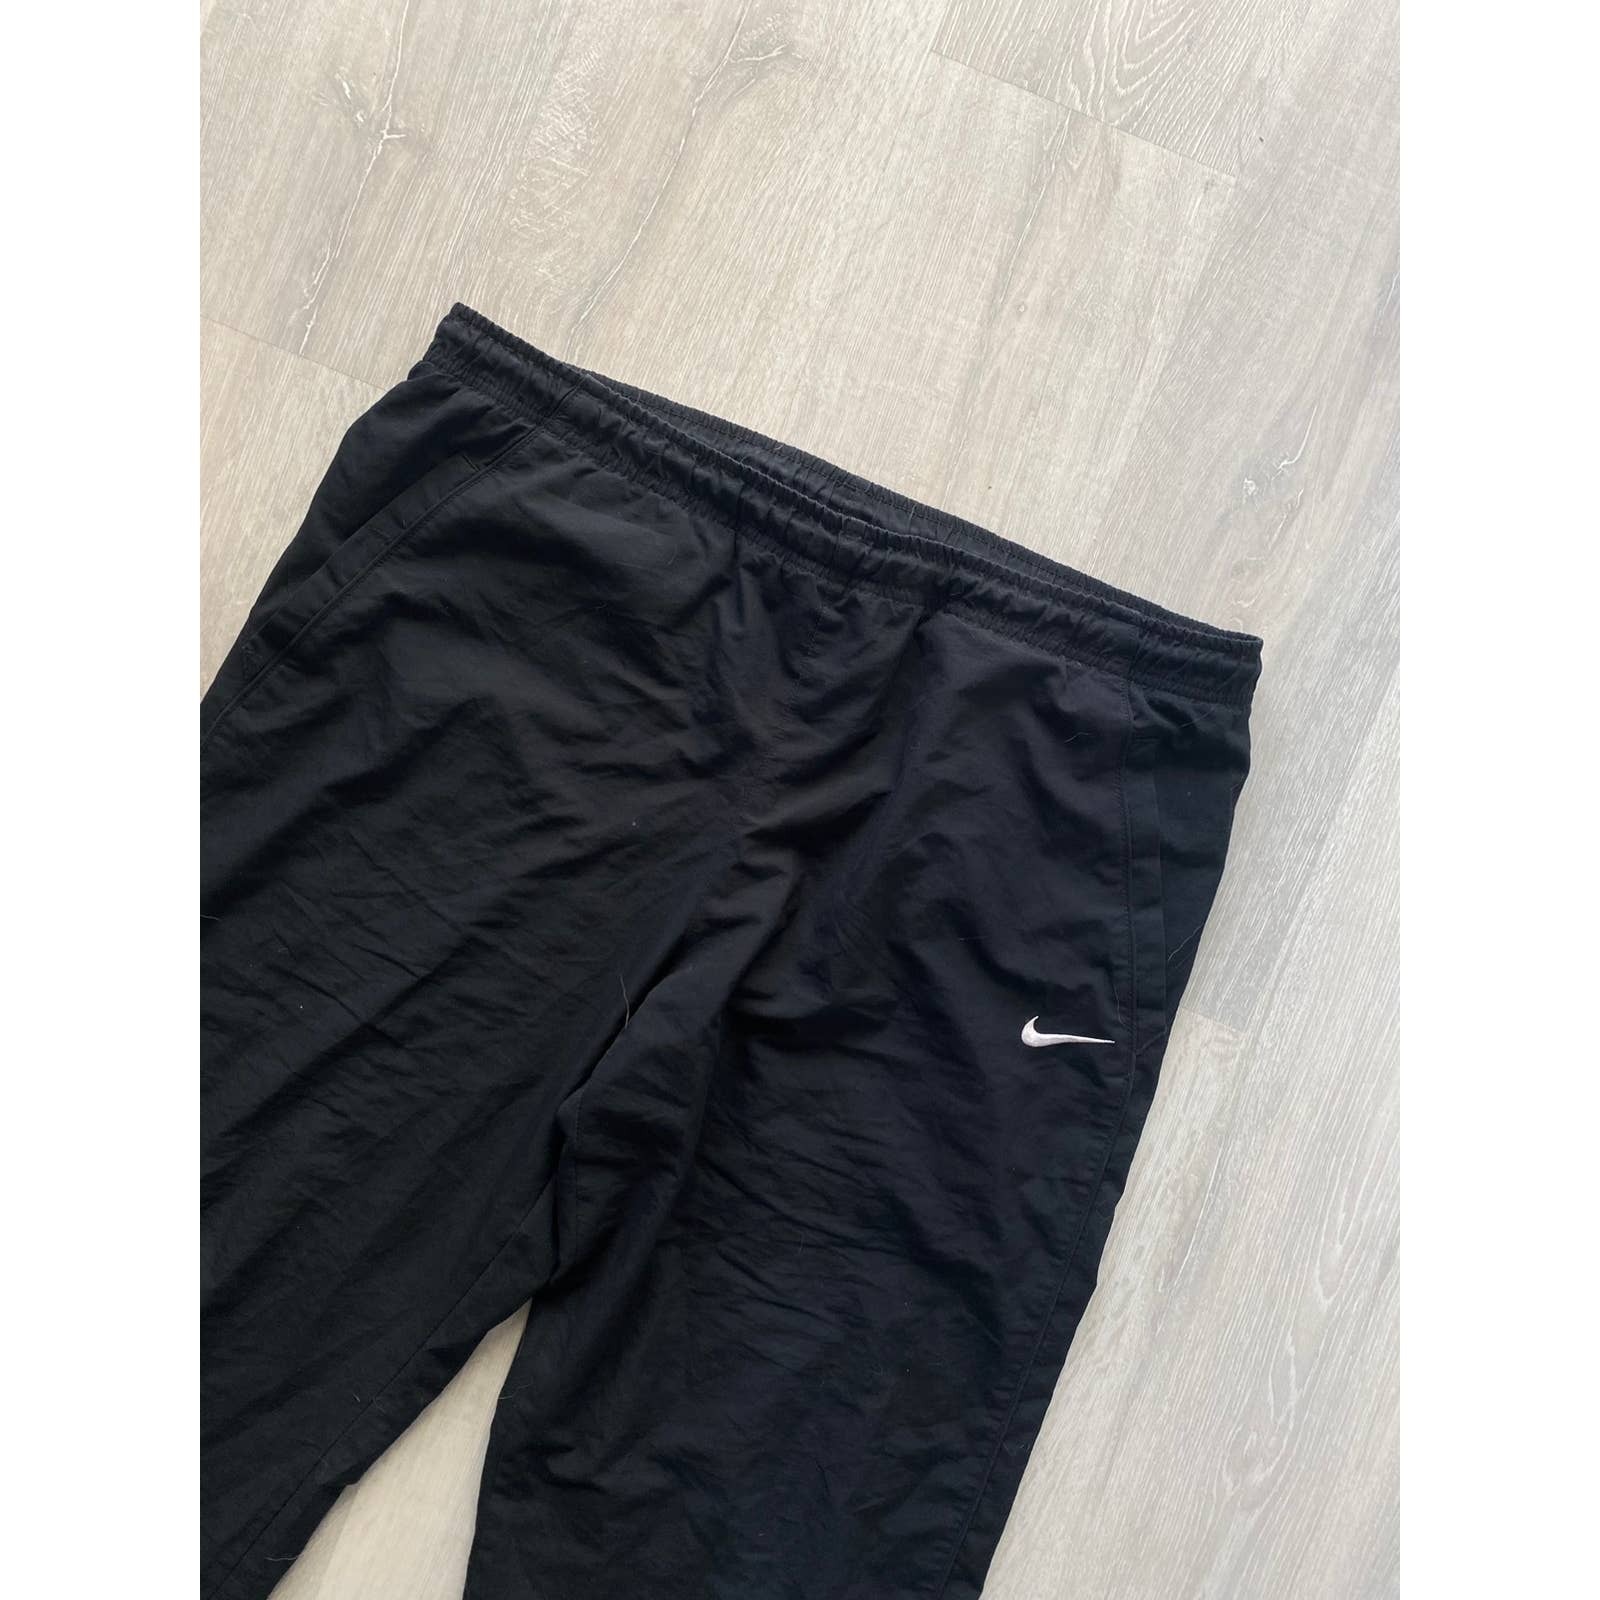 Men's Nike Tracksuit Bottoms, Joggers, Cargo Pants | JD Sports UK